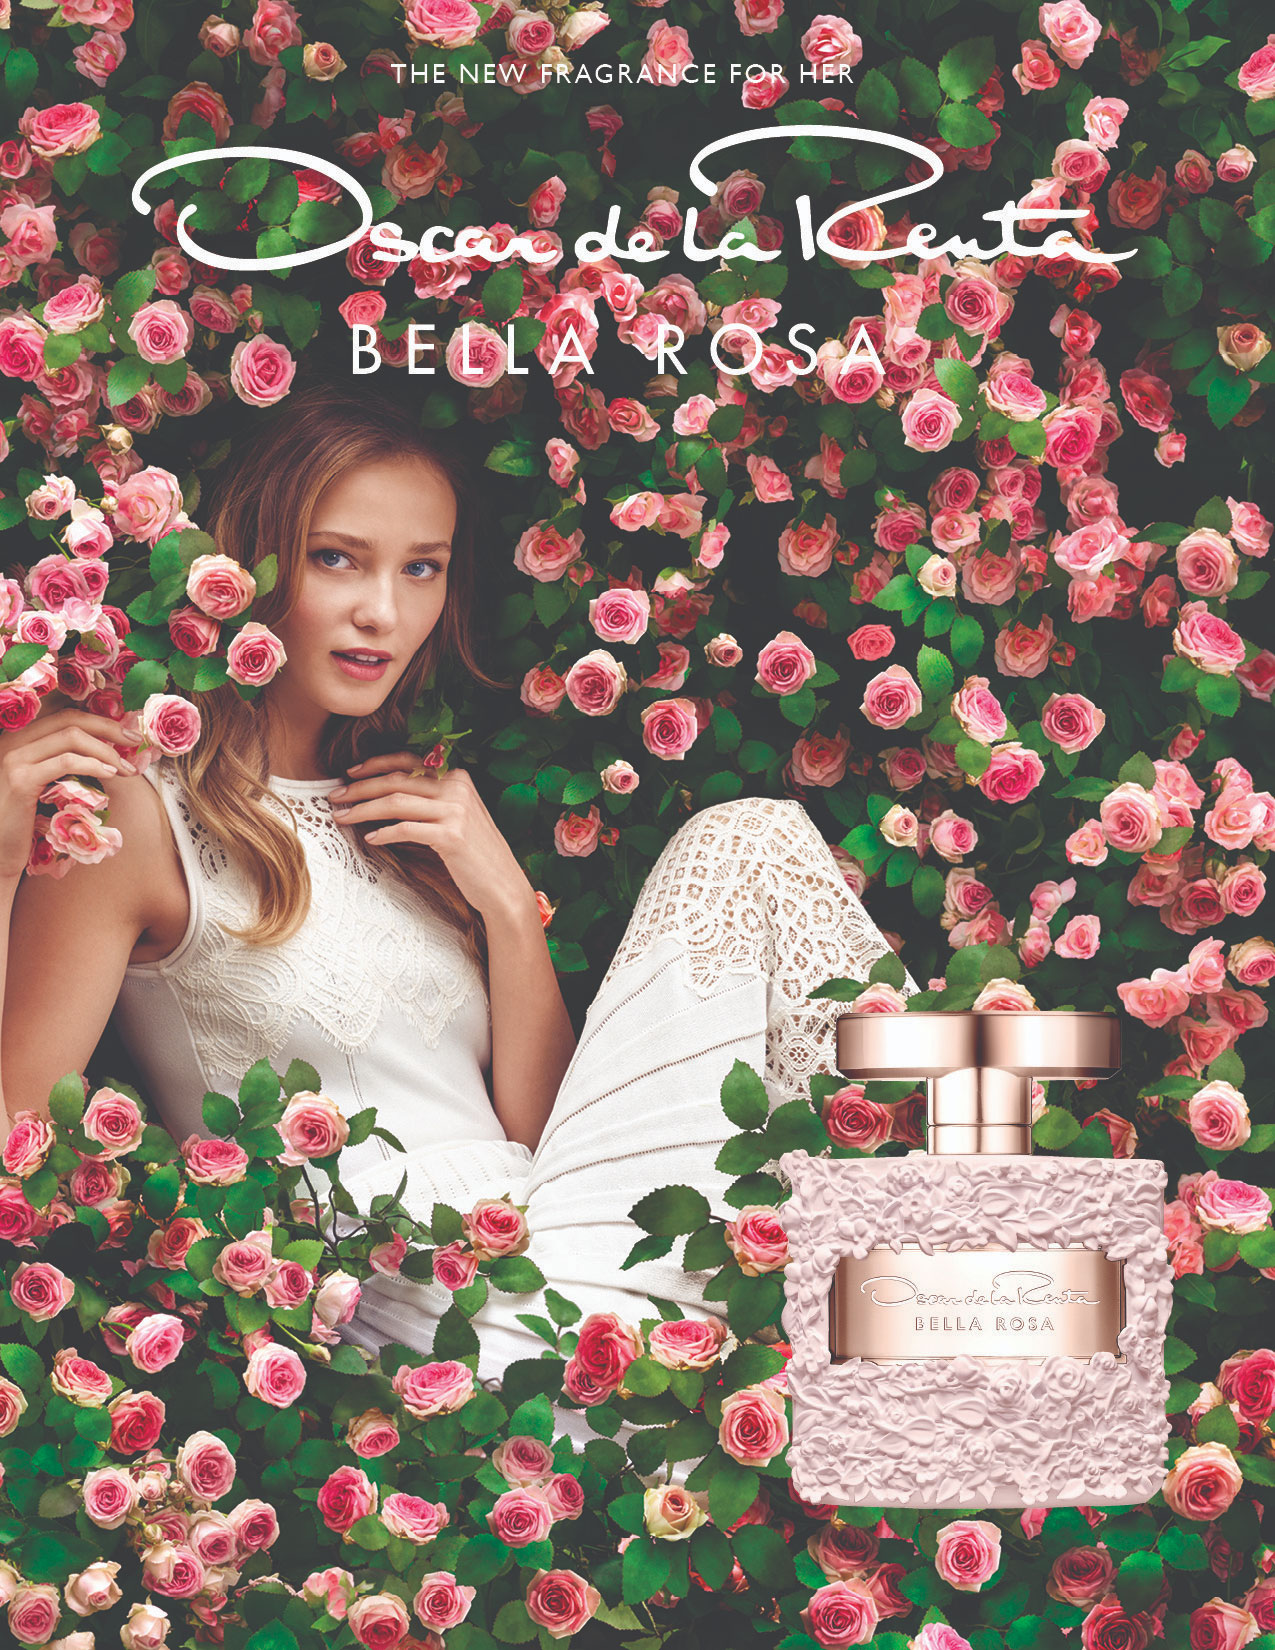 Oscar de la Renta Bella Rosa Perfume Ad